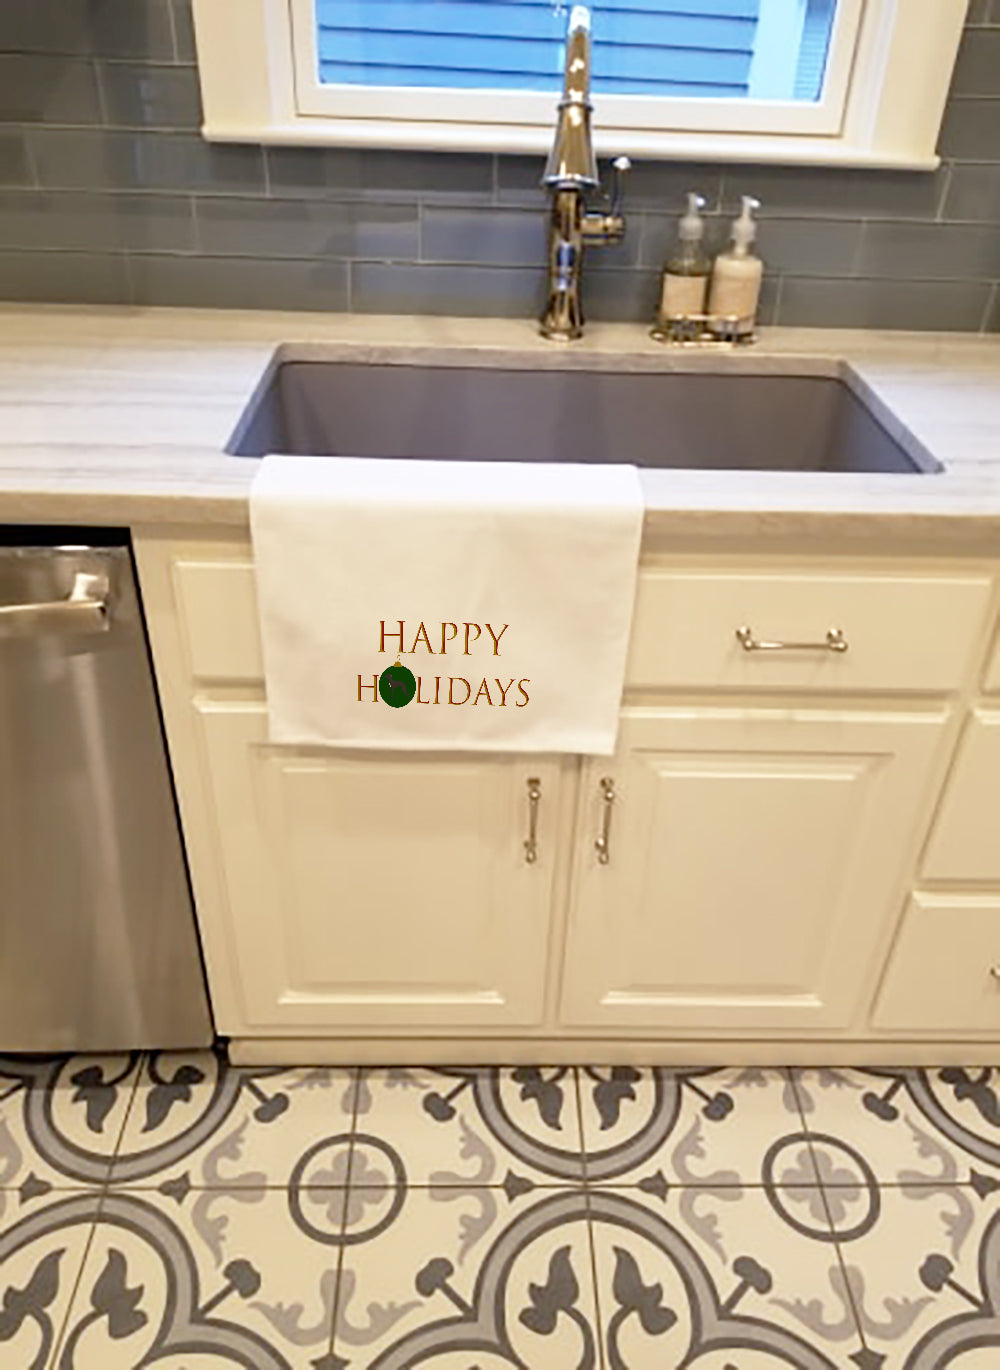 Buy this Italian Greyhound #1 Happy Holidays White Kitchen Towel Set of 2